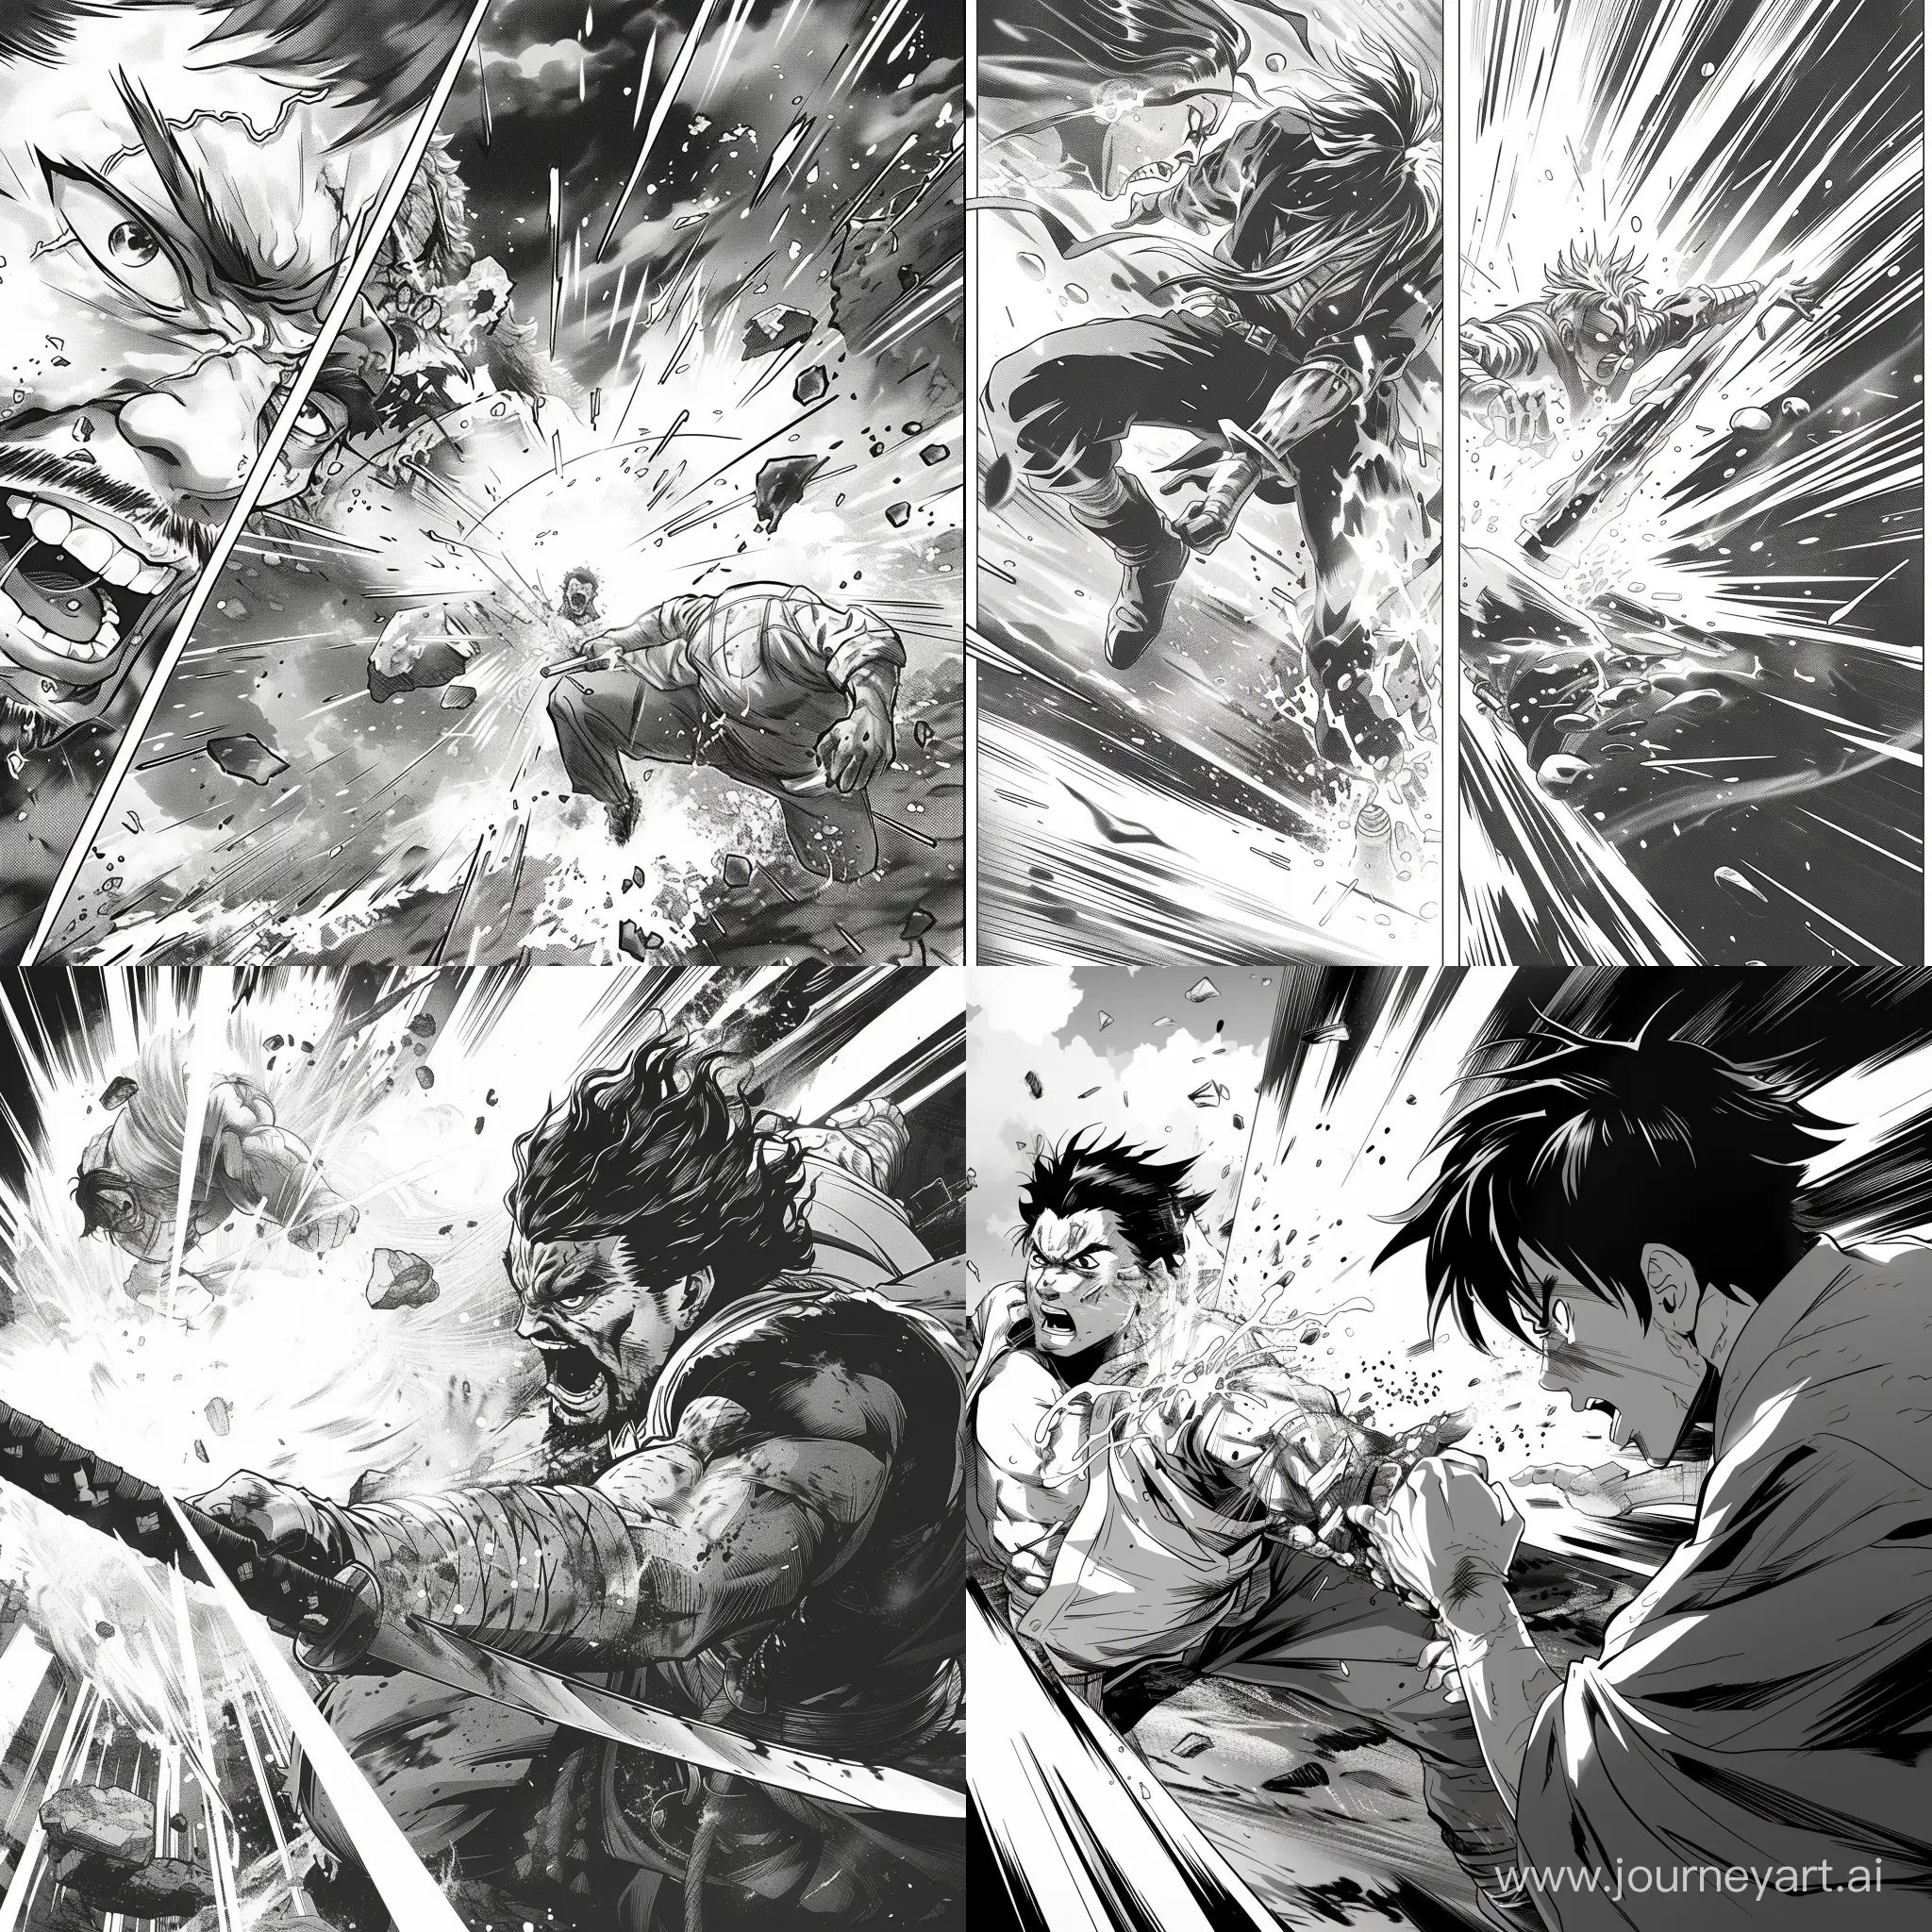 Manga panel with epic fight 